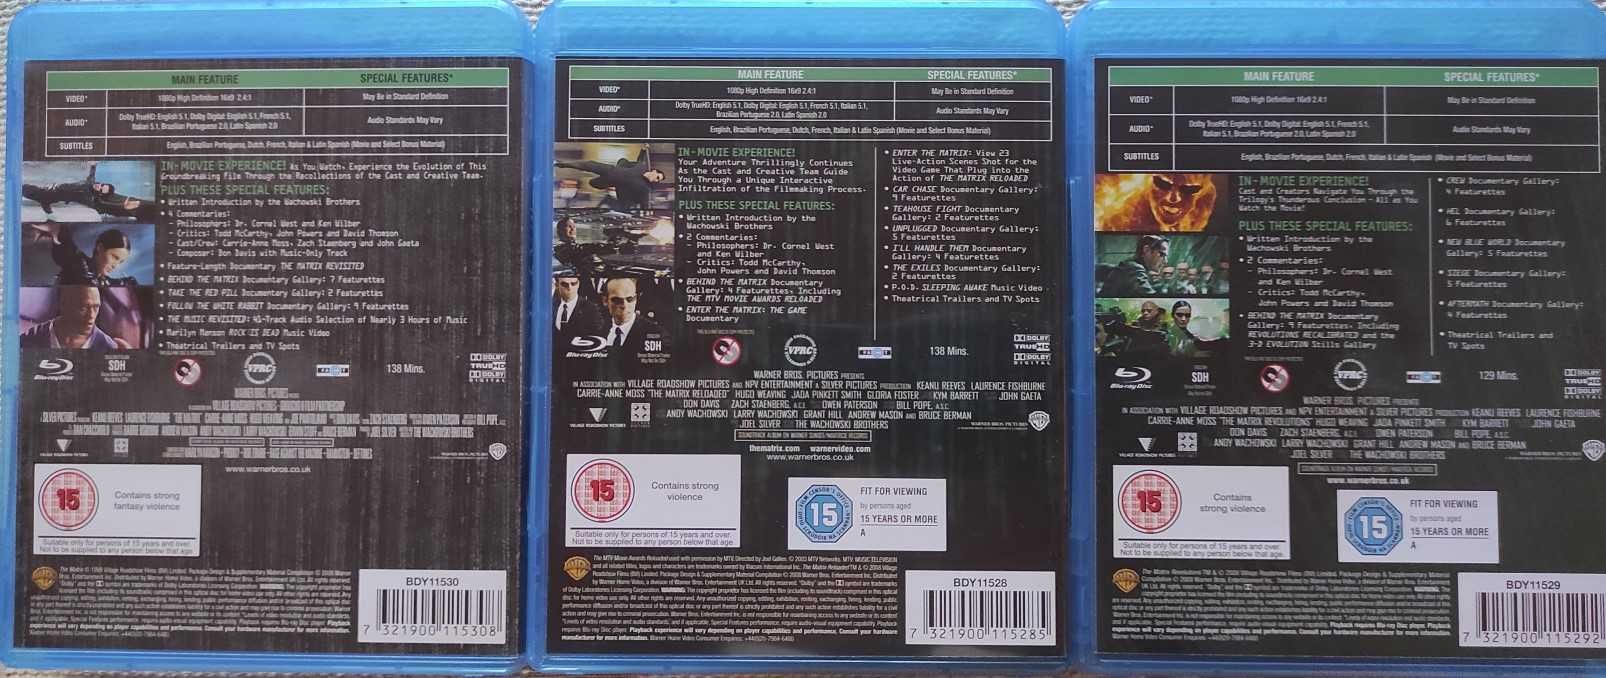 Trilogia Filmes Complete Matrix trilogy Blu-Ray